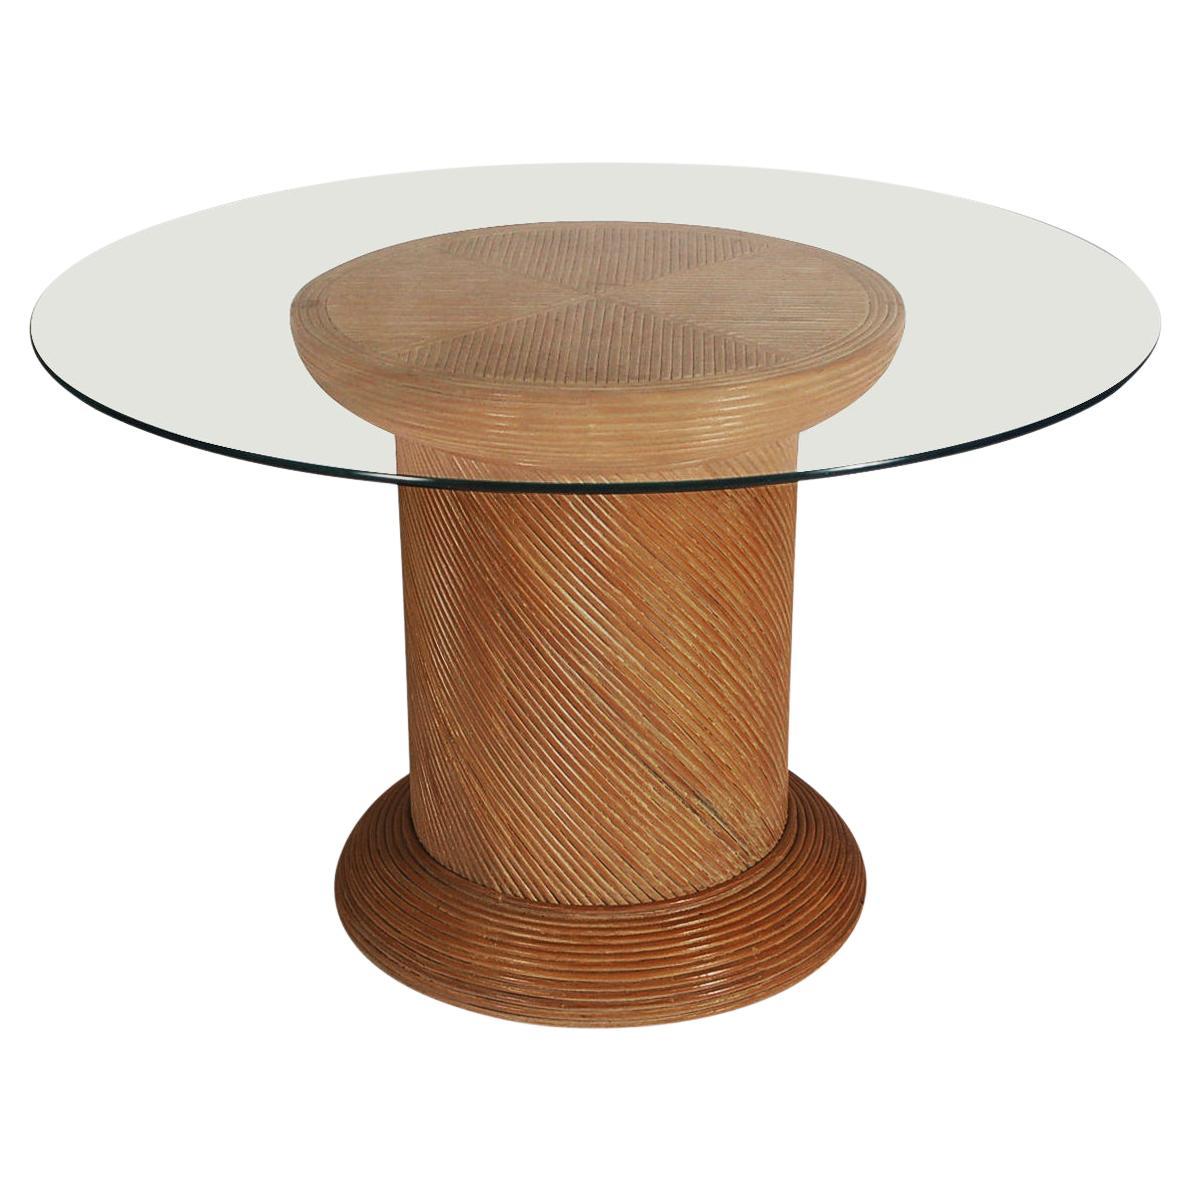 Table de salle à manger circulaire ou ronde en bambou et verre The Moderns